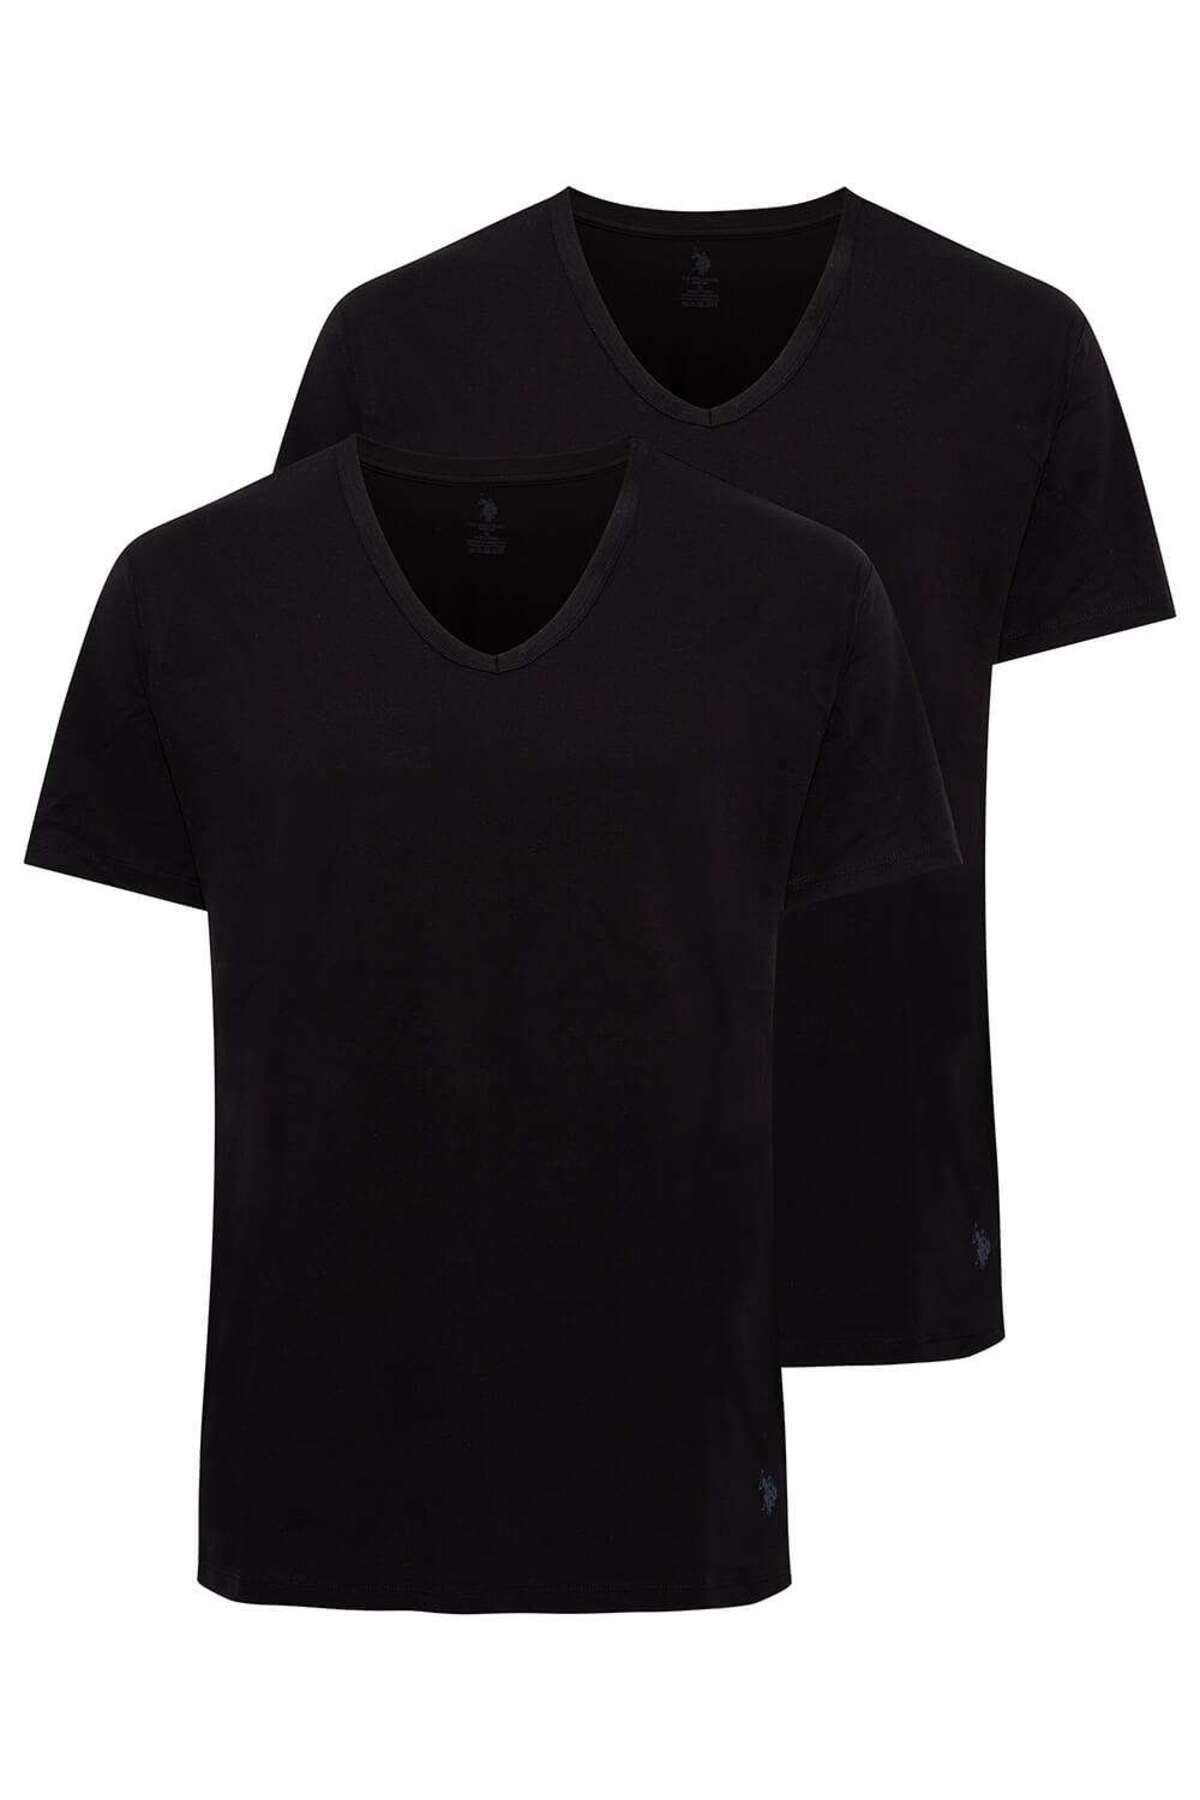 U.S. Polo Assn. Erkek Siyah 2 Li T-shirt 80199